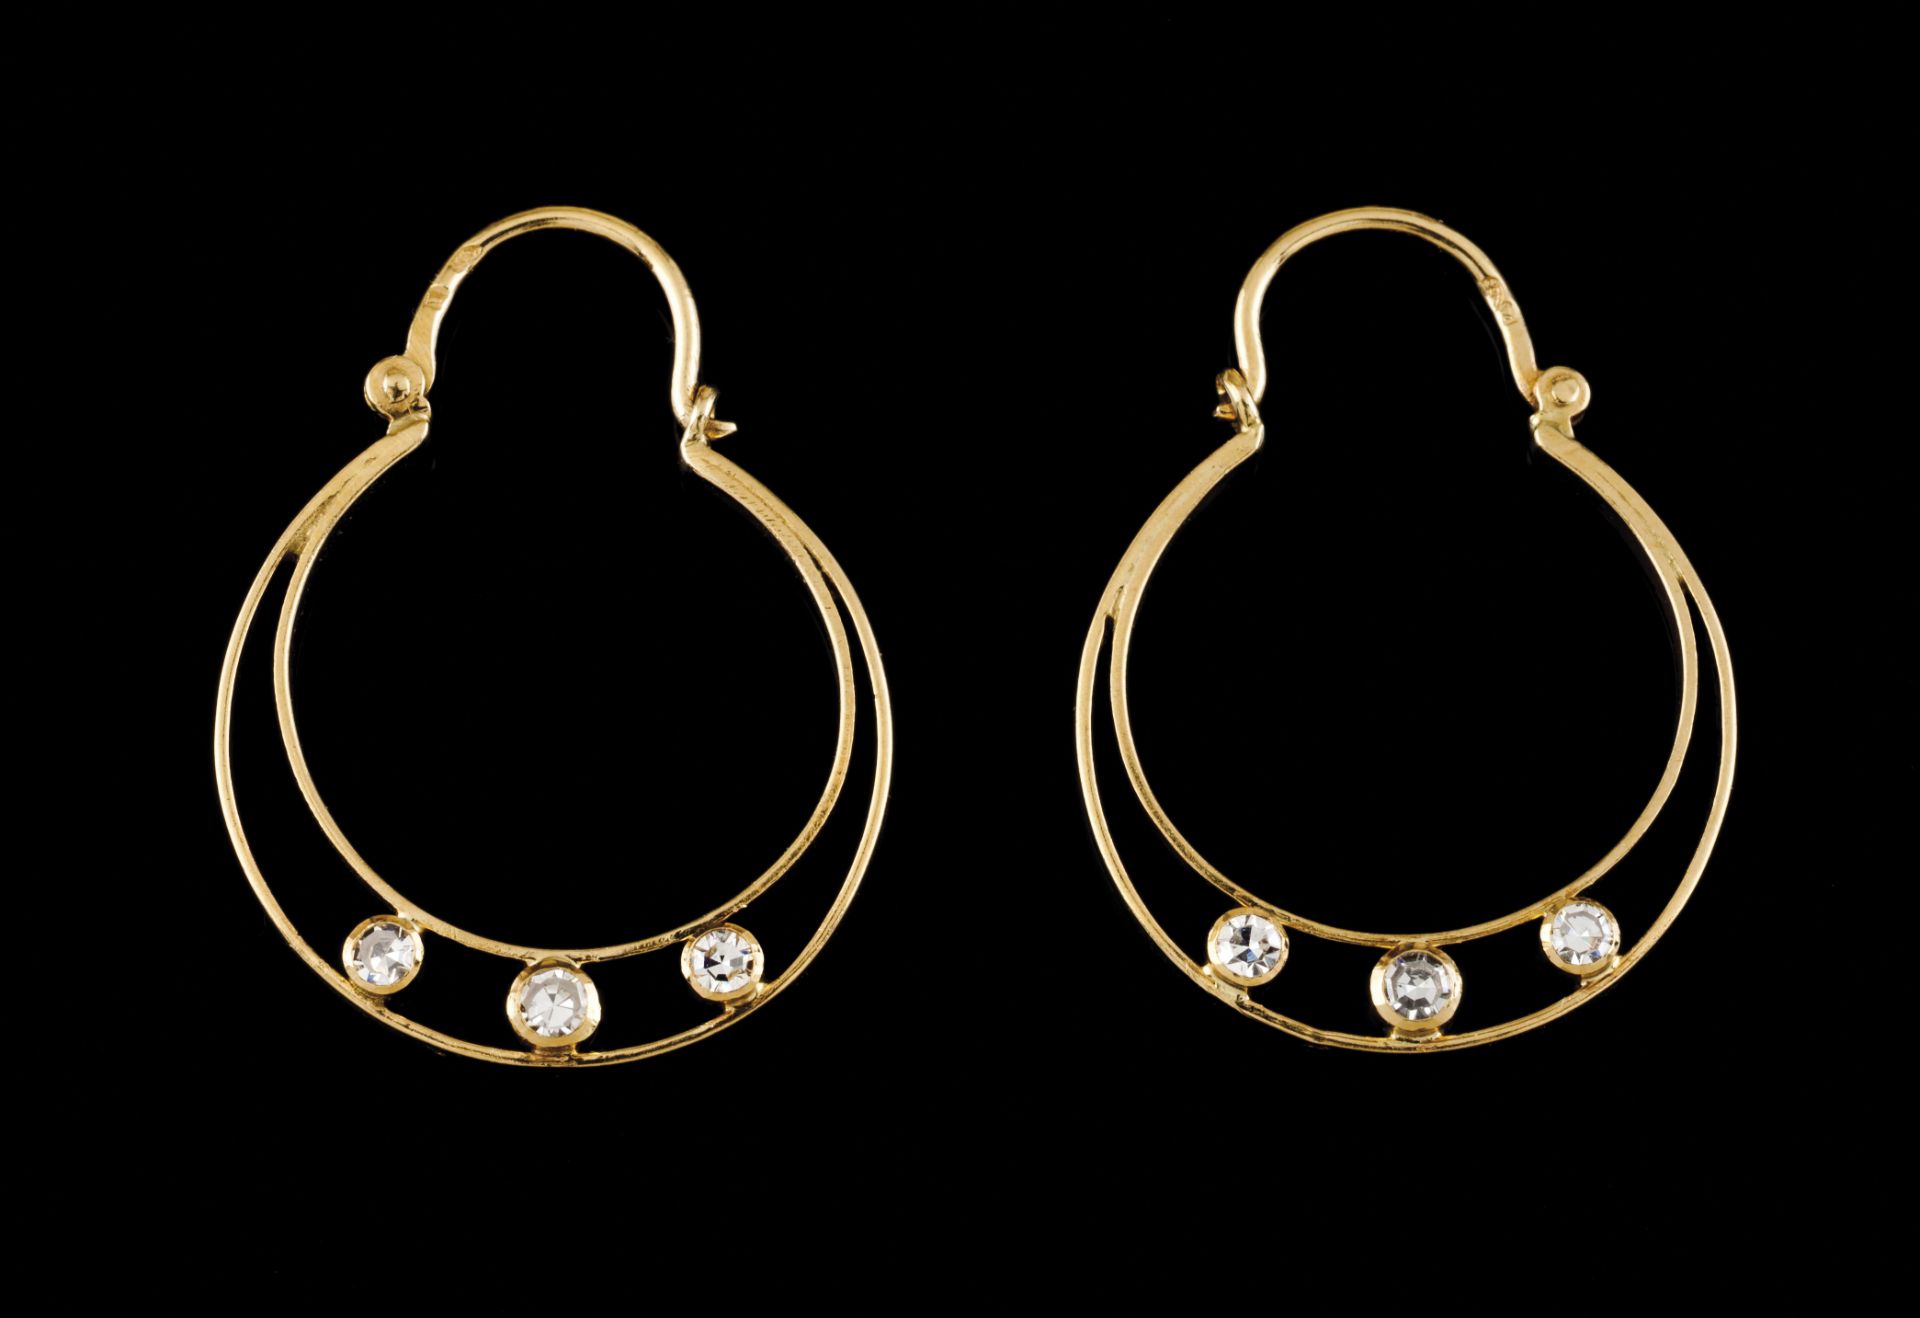 A pair of earringsPortuguese goldLarge drop earrings "arrecadas" set with 6 8/8 cut diamondsOporto